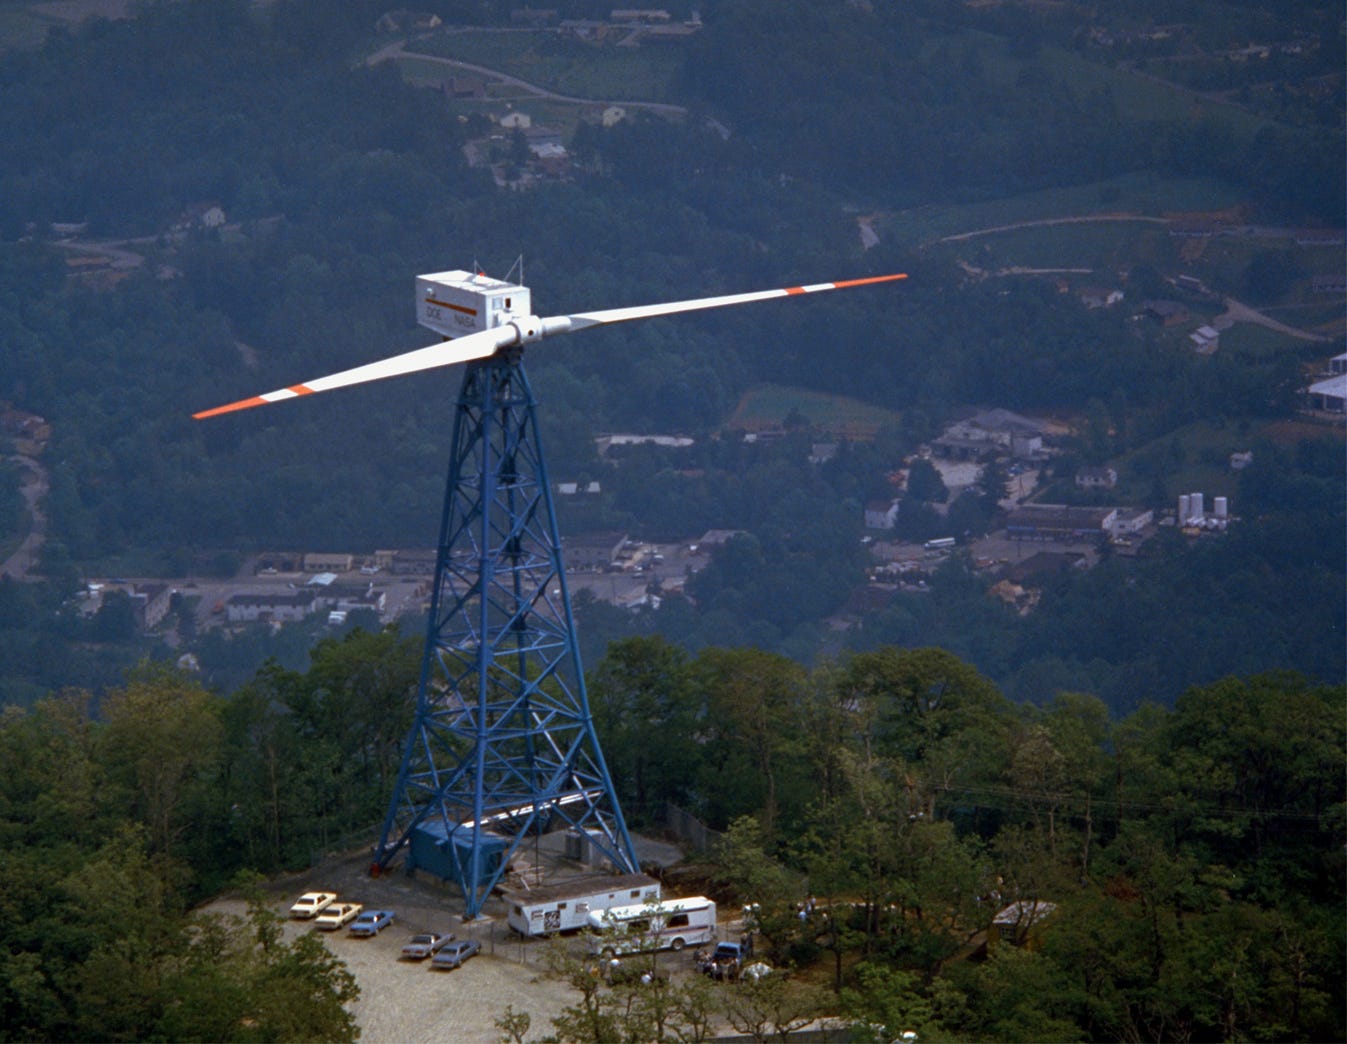 https://upload.wikimedia.org/wikipedia/commons/9/97/NASA_Mod_1_wind_turbine.jpg